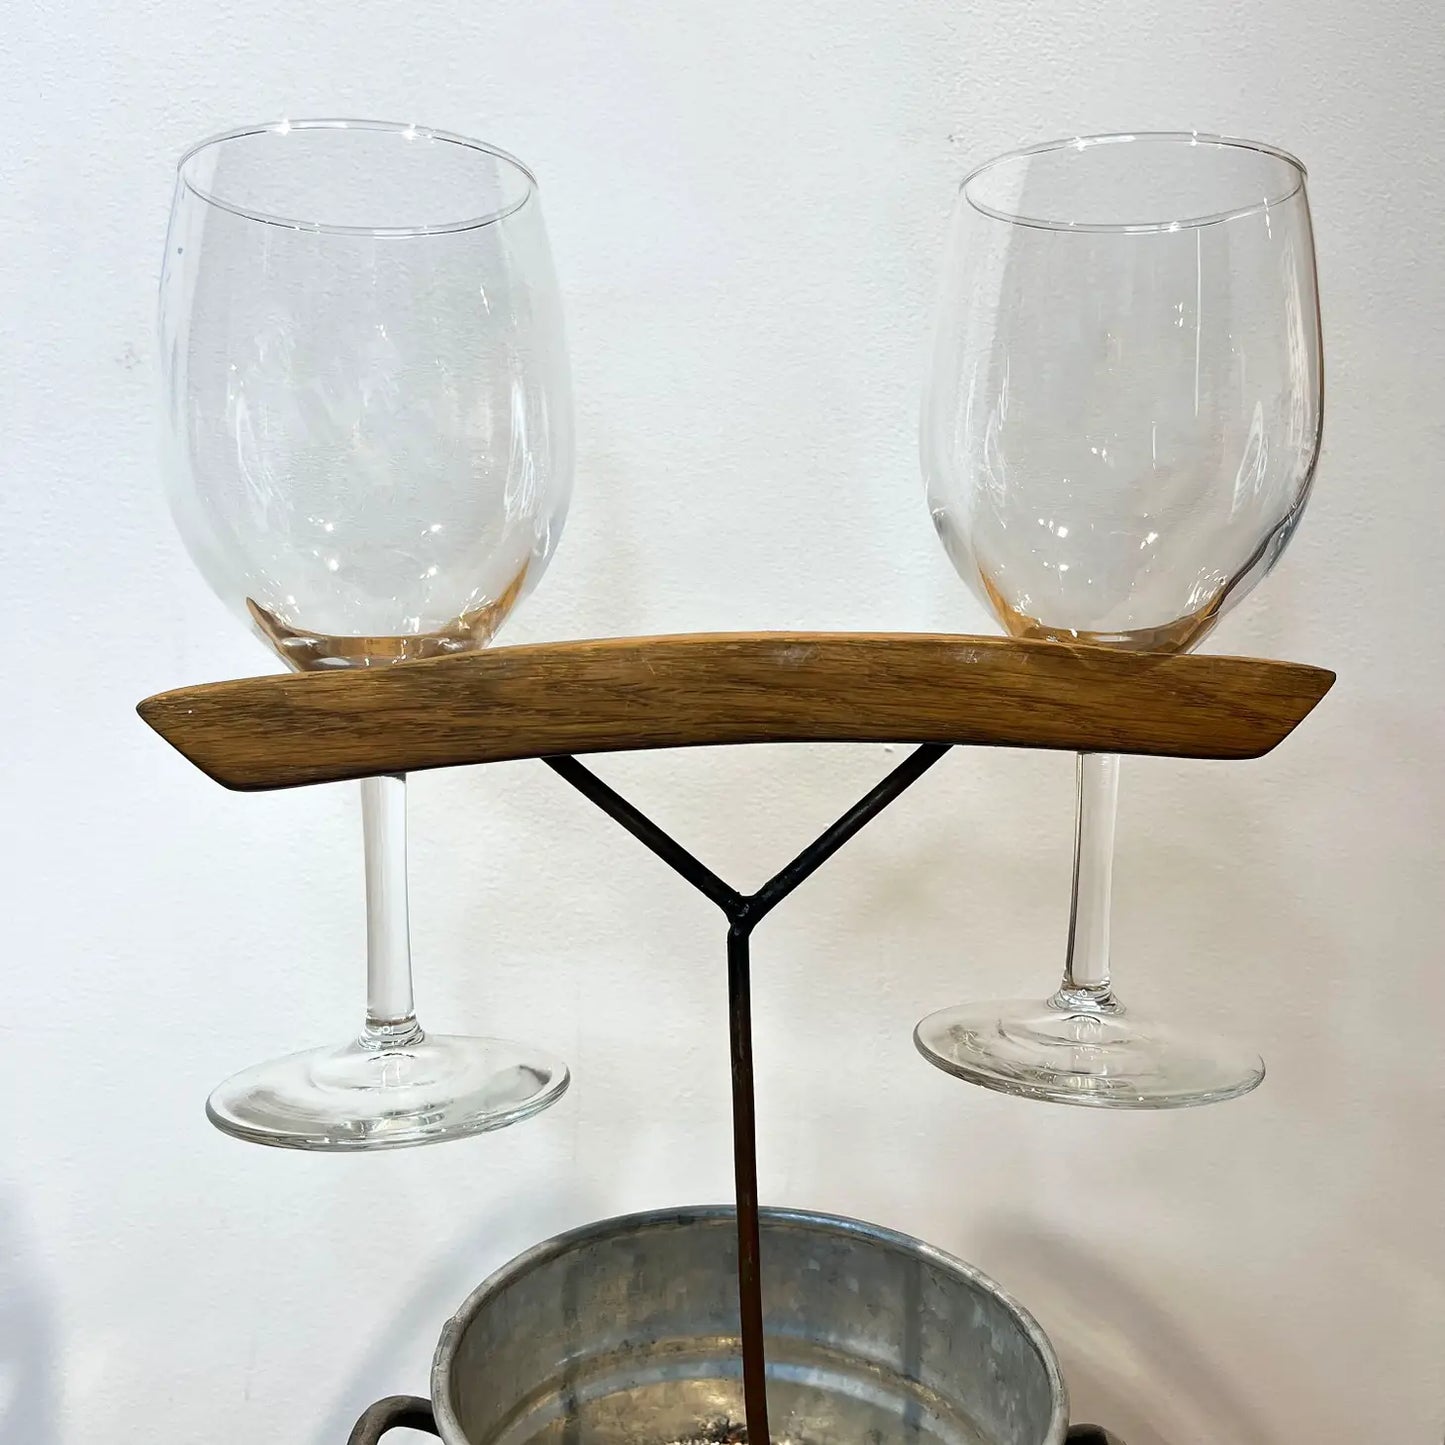 Yard Stake Wine Glass Holder